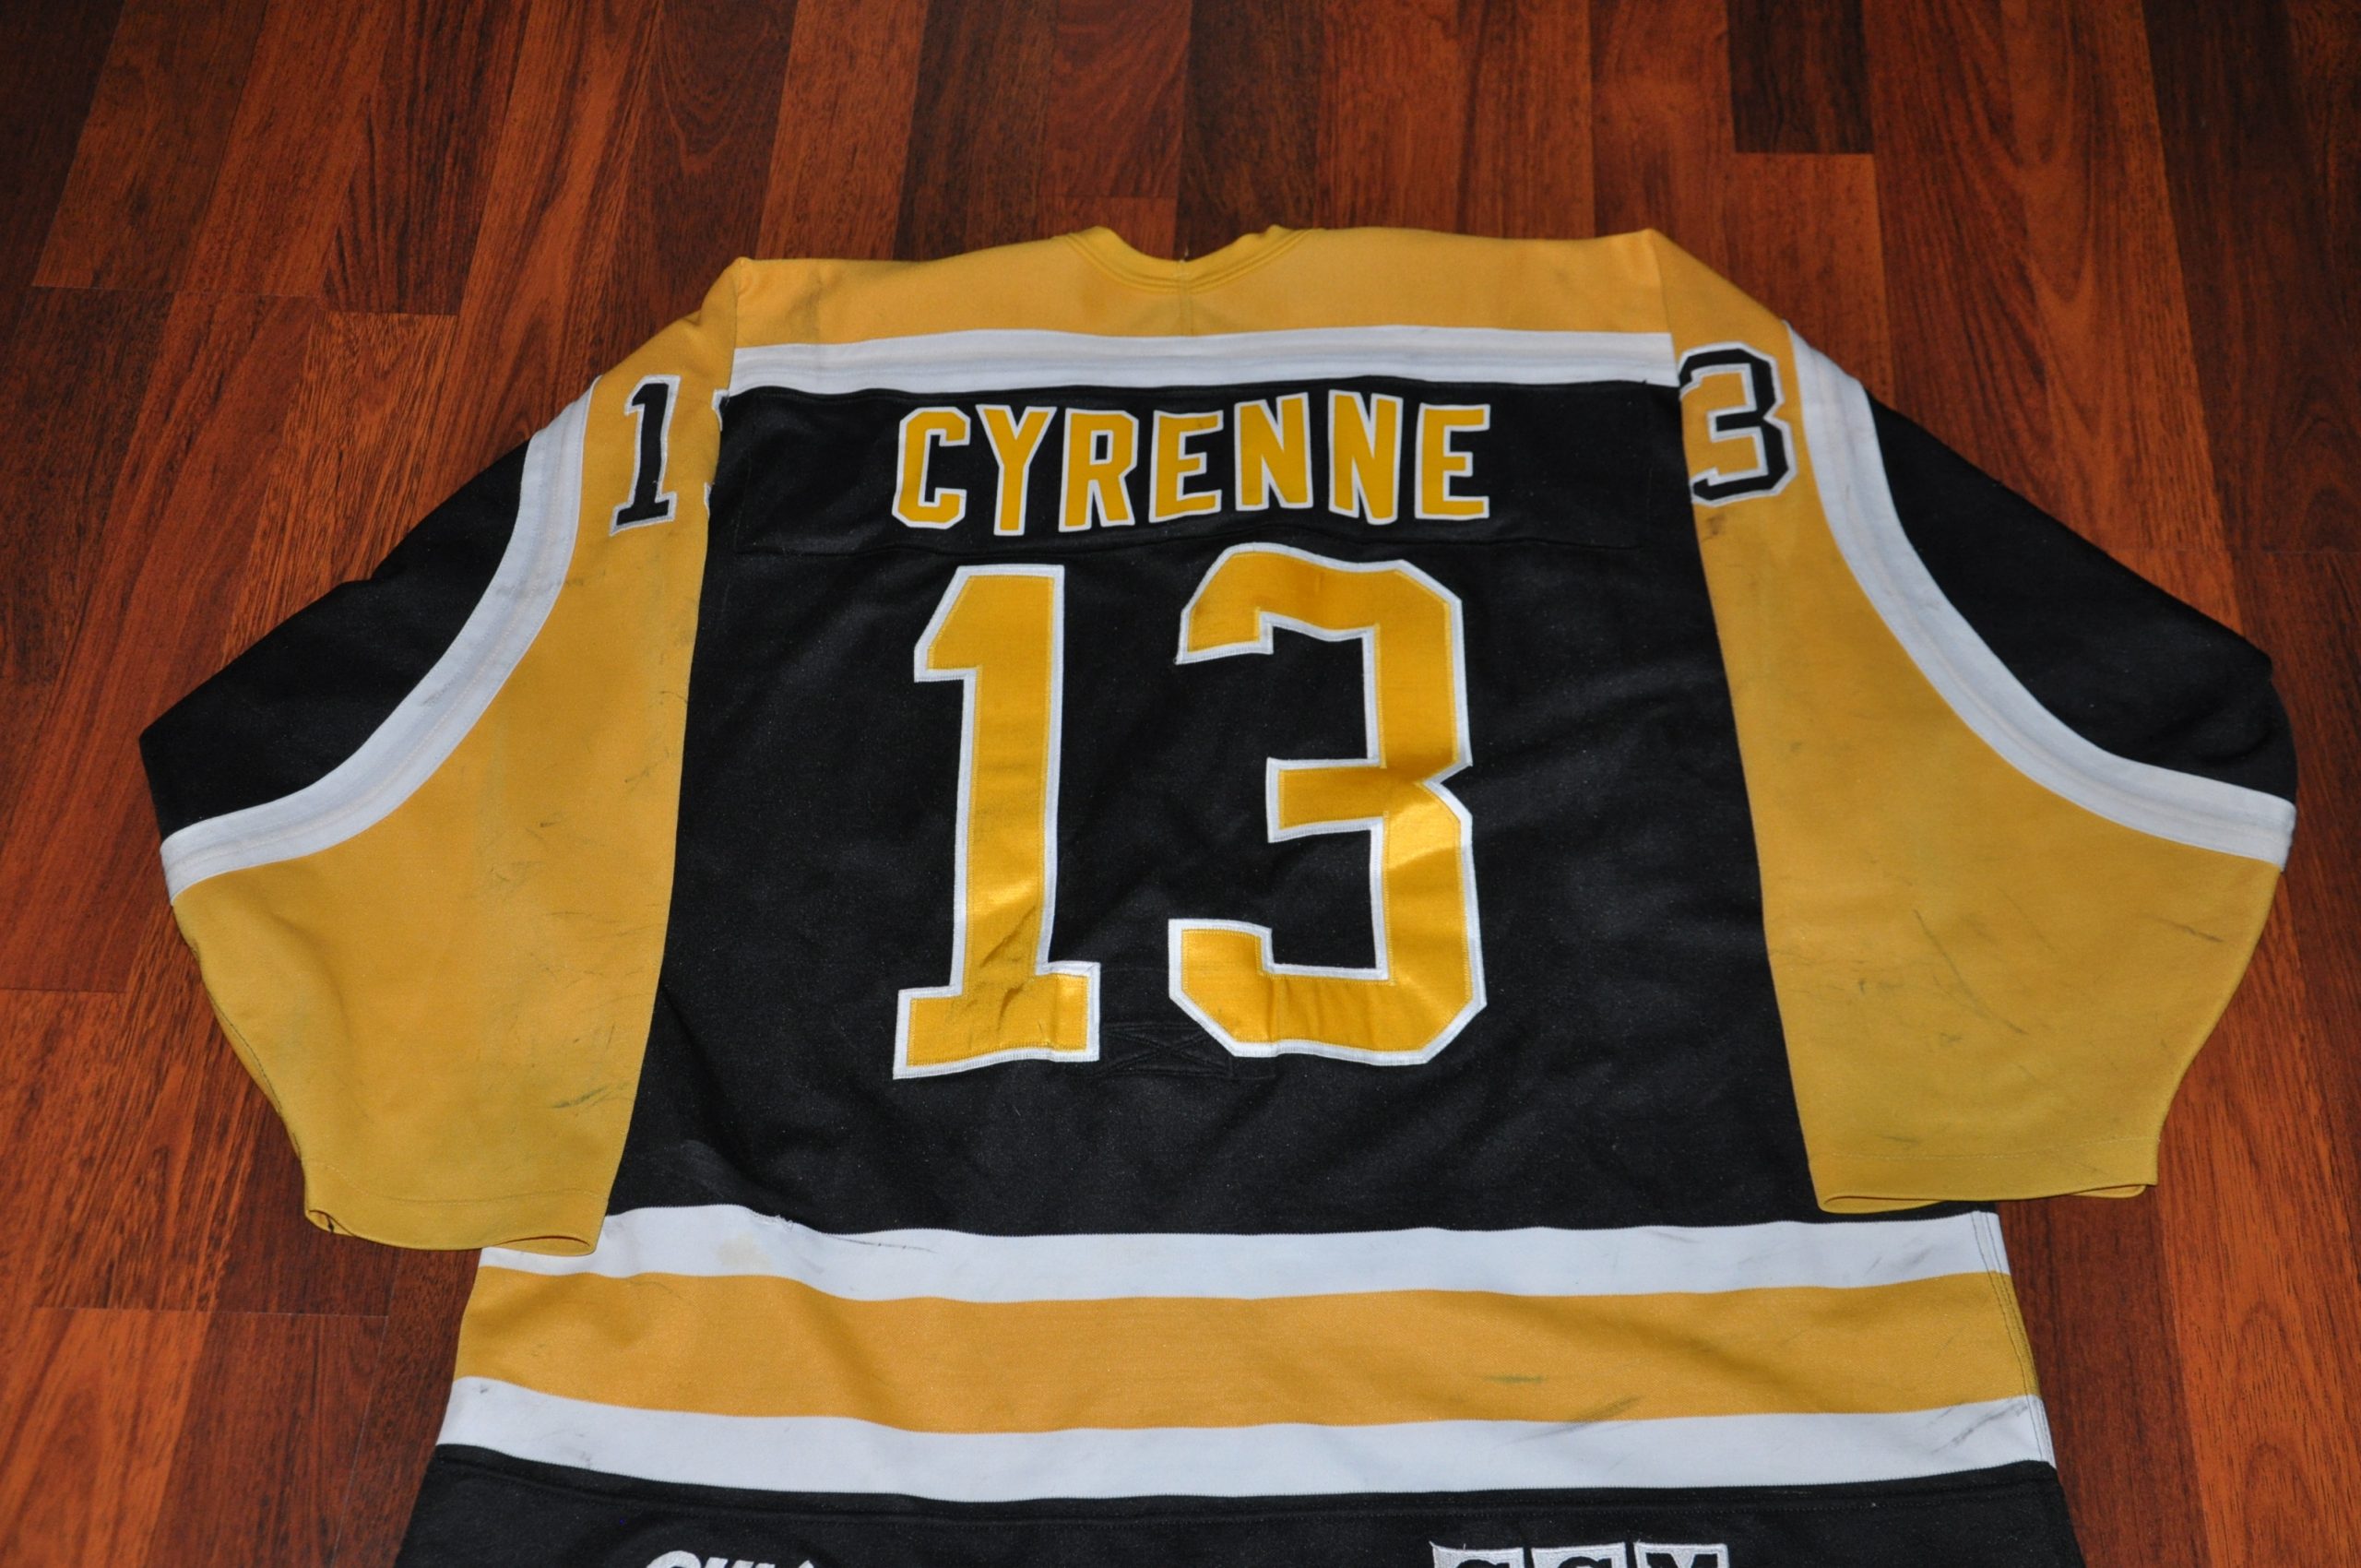 Brandon Wheat Kings Cory Cyrenne #13 – Hockey Jersey